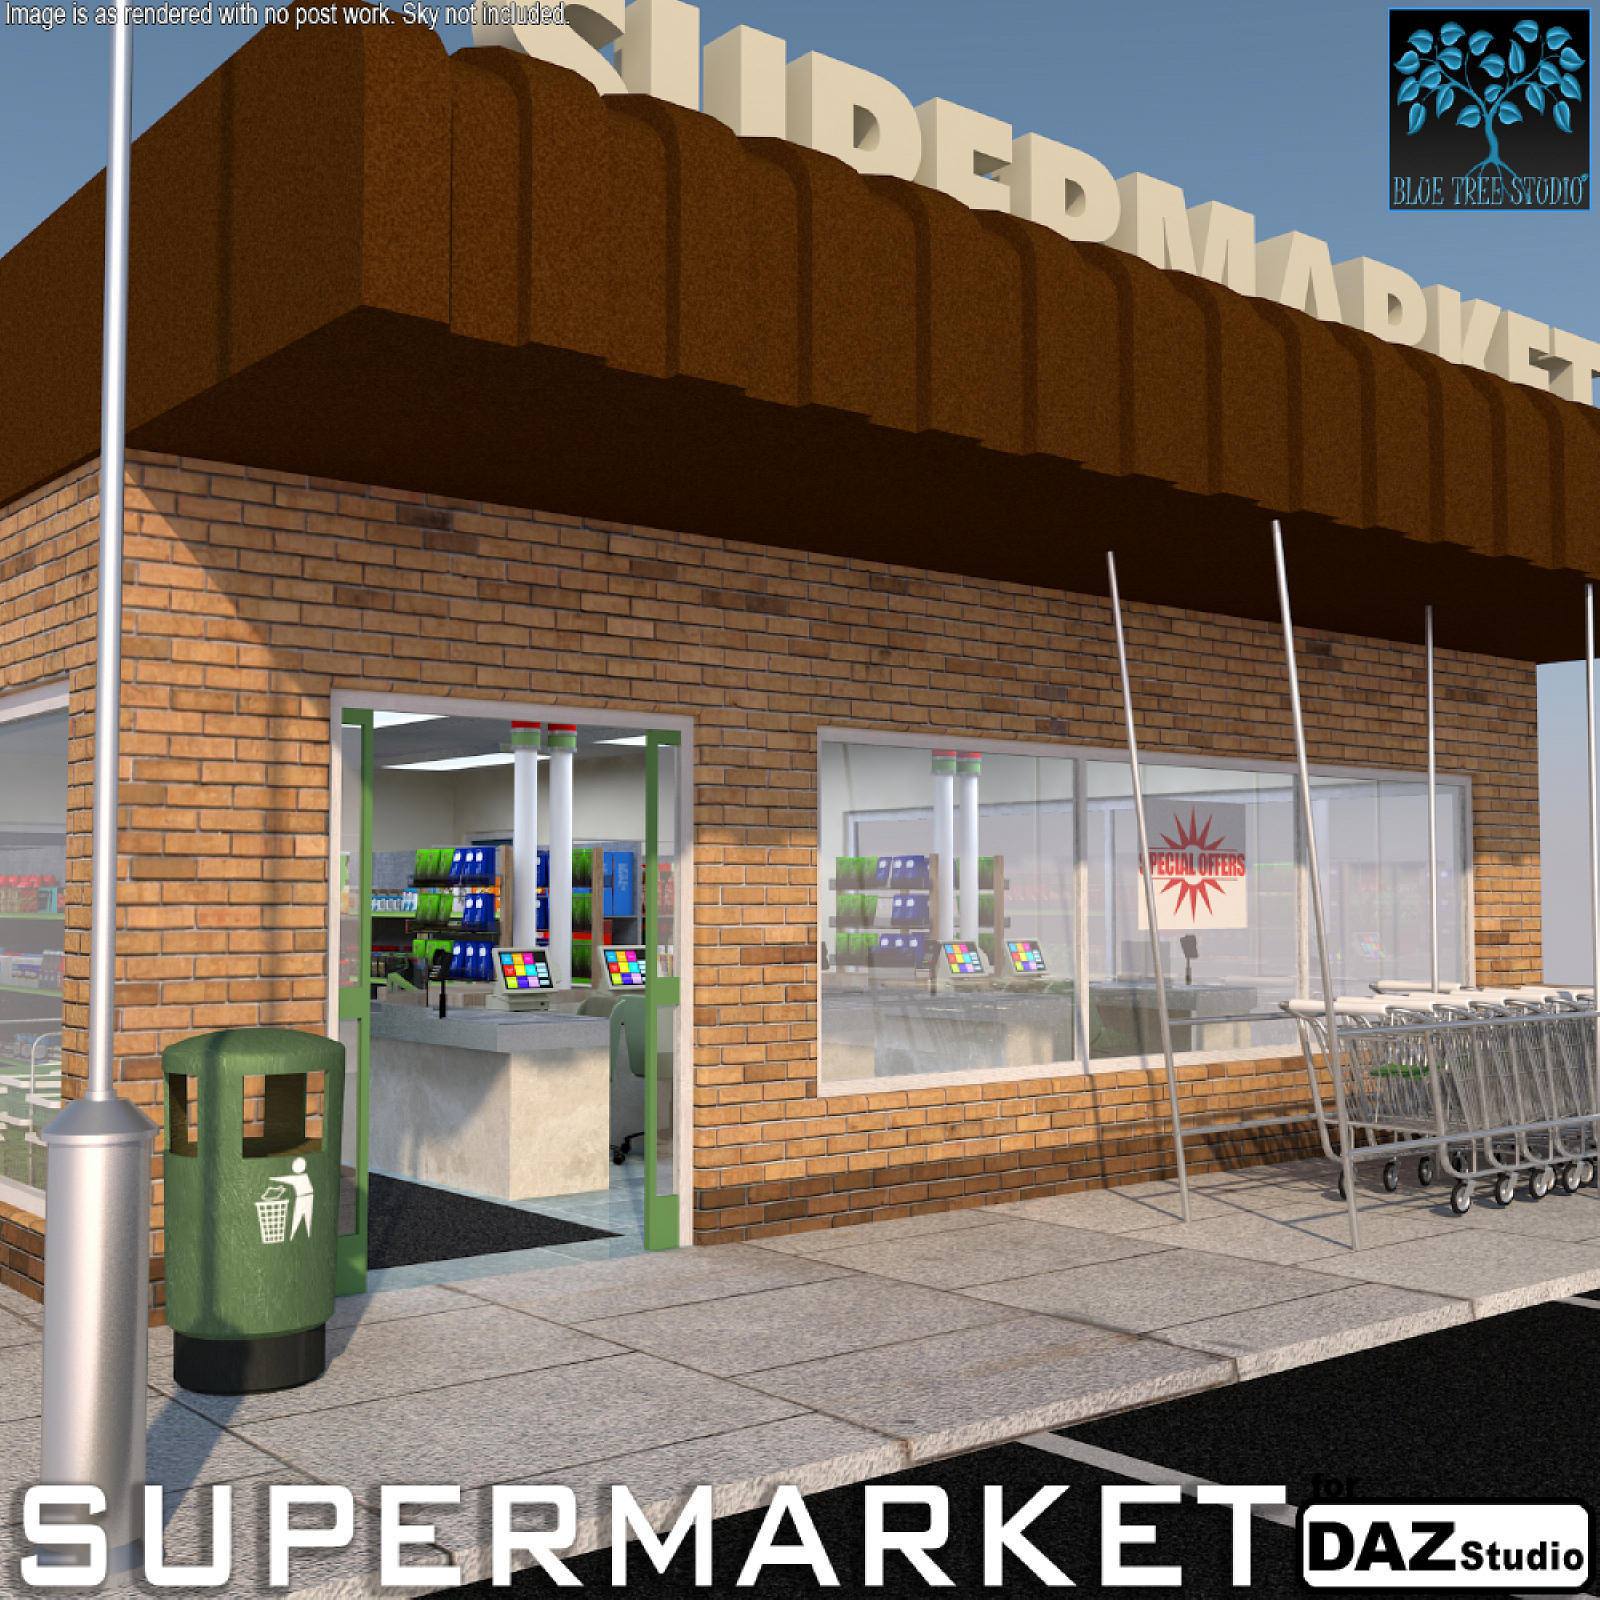 Supermarket for Daz Studio_DAZ3D下载站